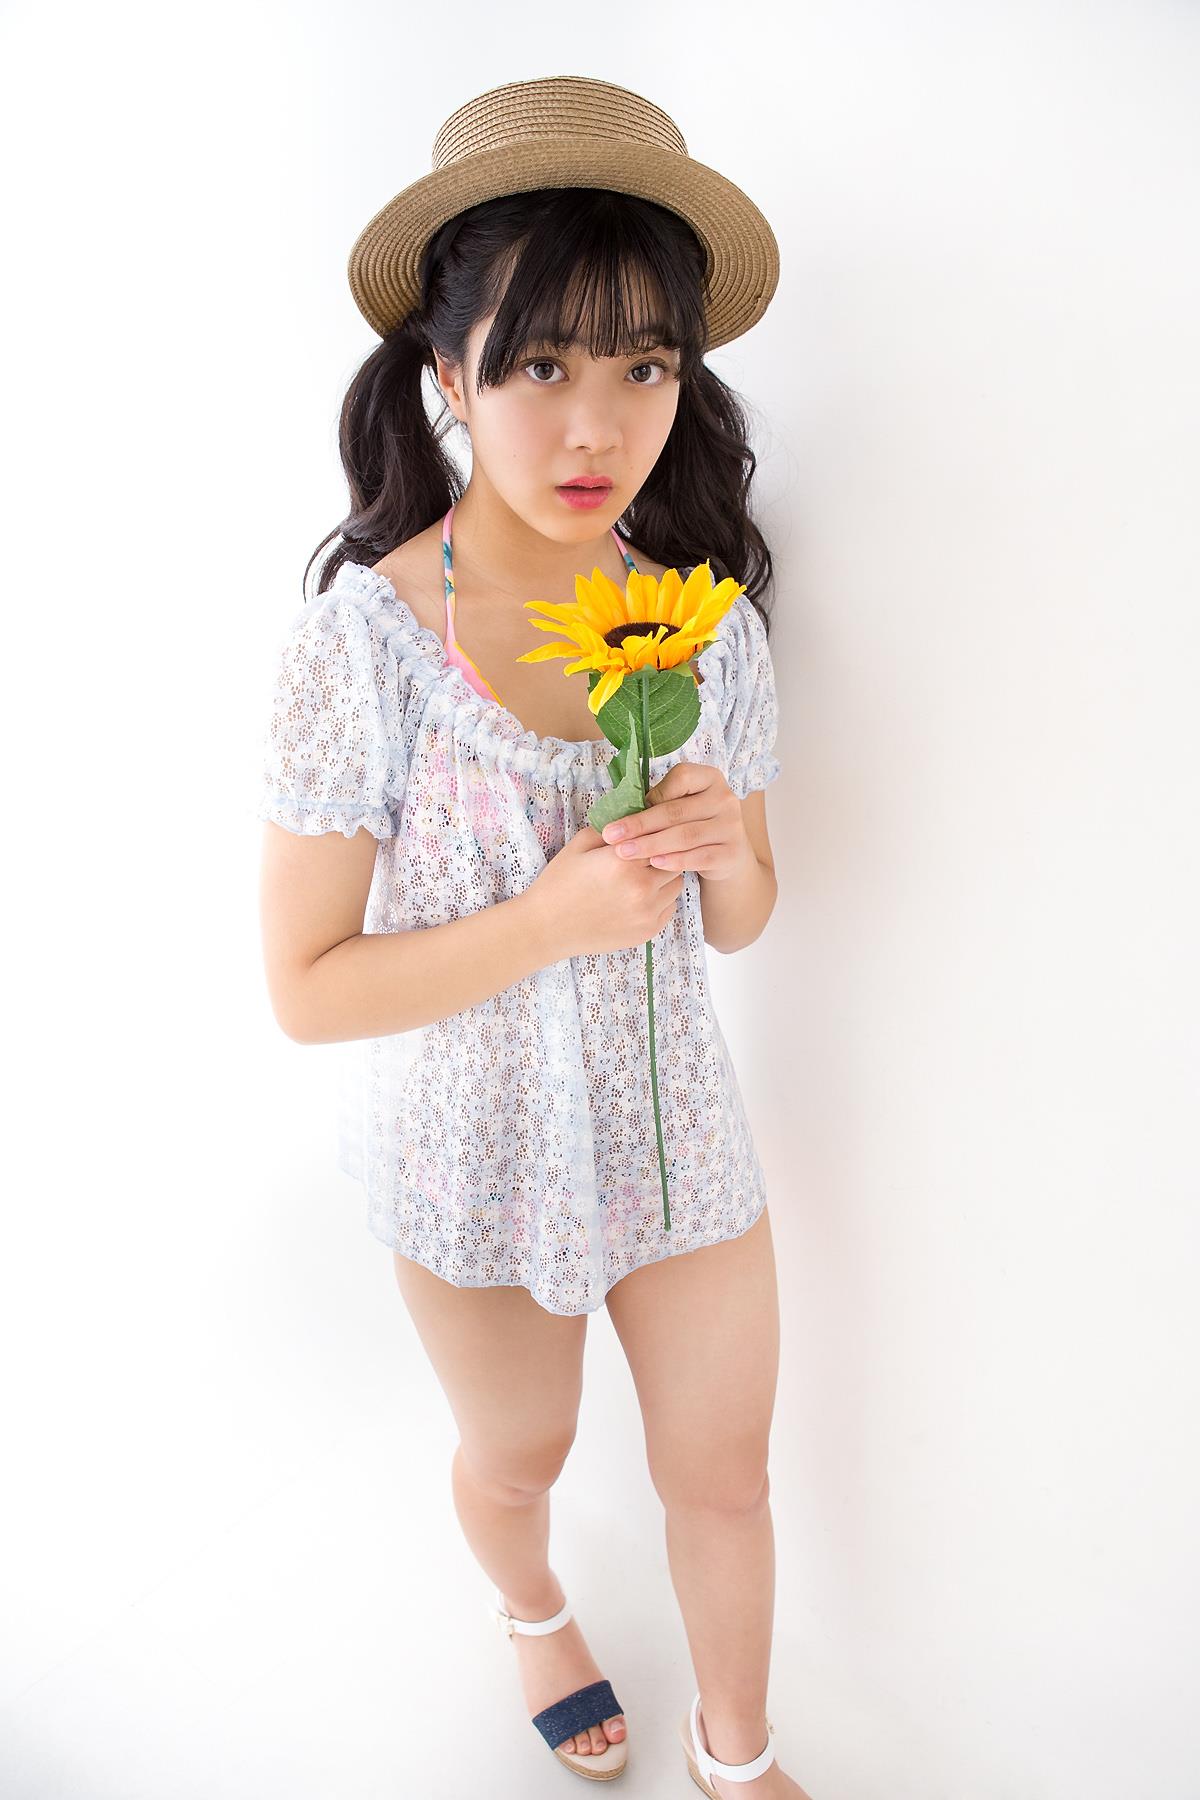 Minisuka.tv Saria Natsume 夏目咲莉愛 Premium Gallery 05 - 23.jpg